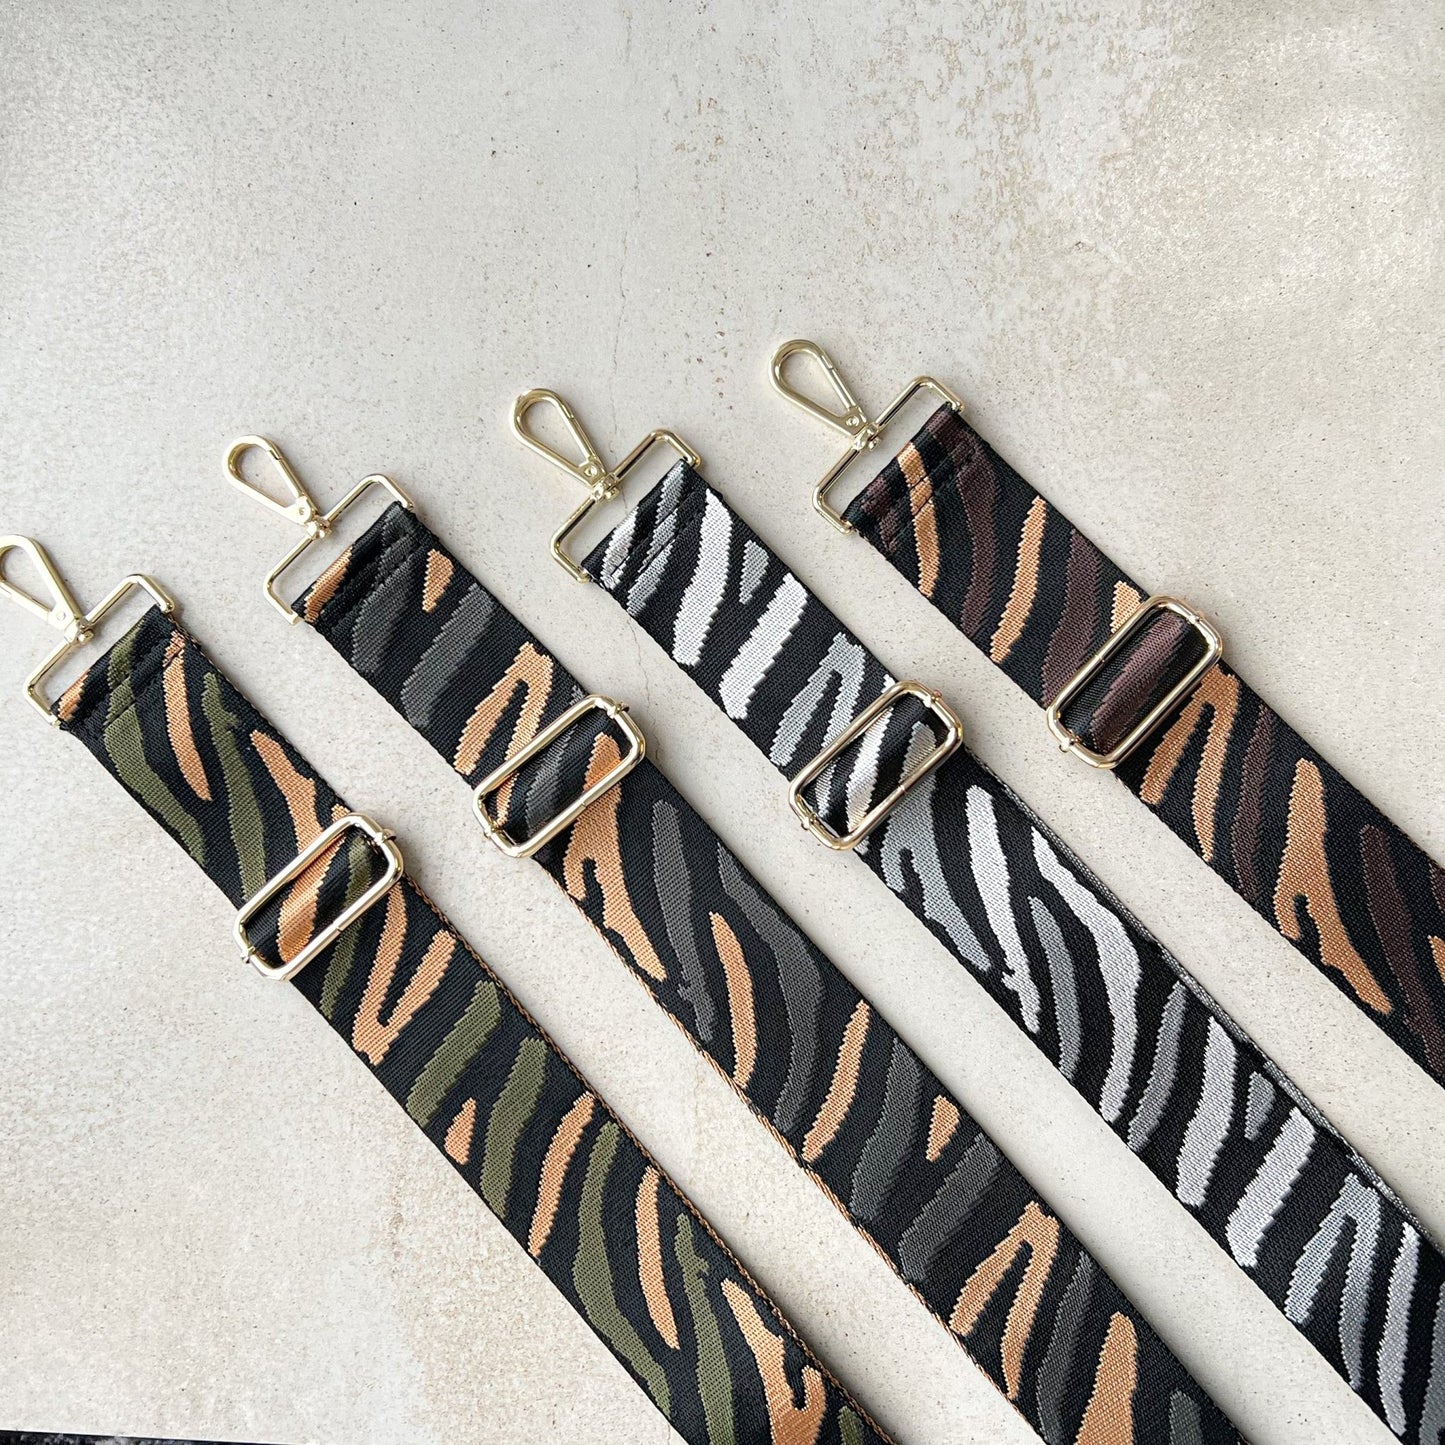 Zebra multi Print Pattern Bag Straps - OLIVIA AND GRAY LTD